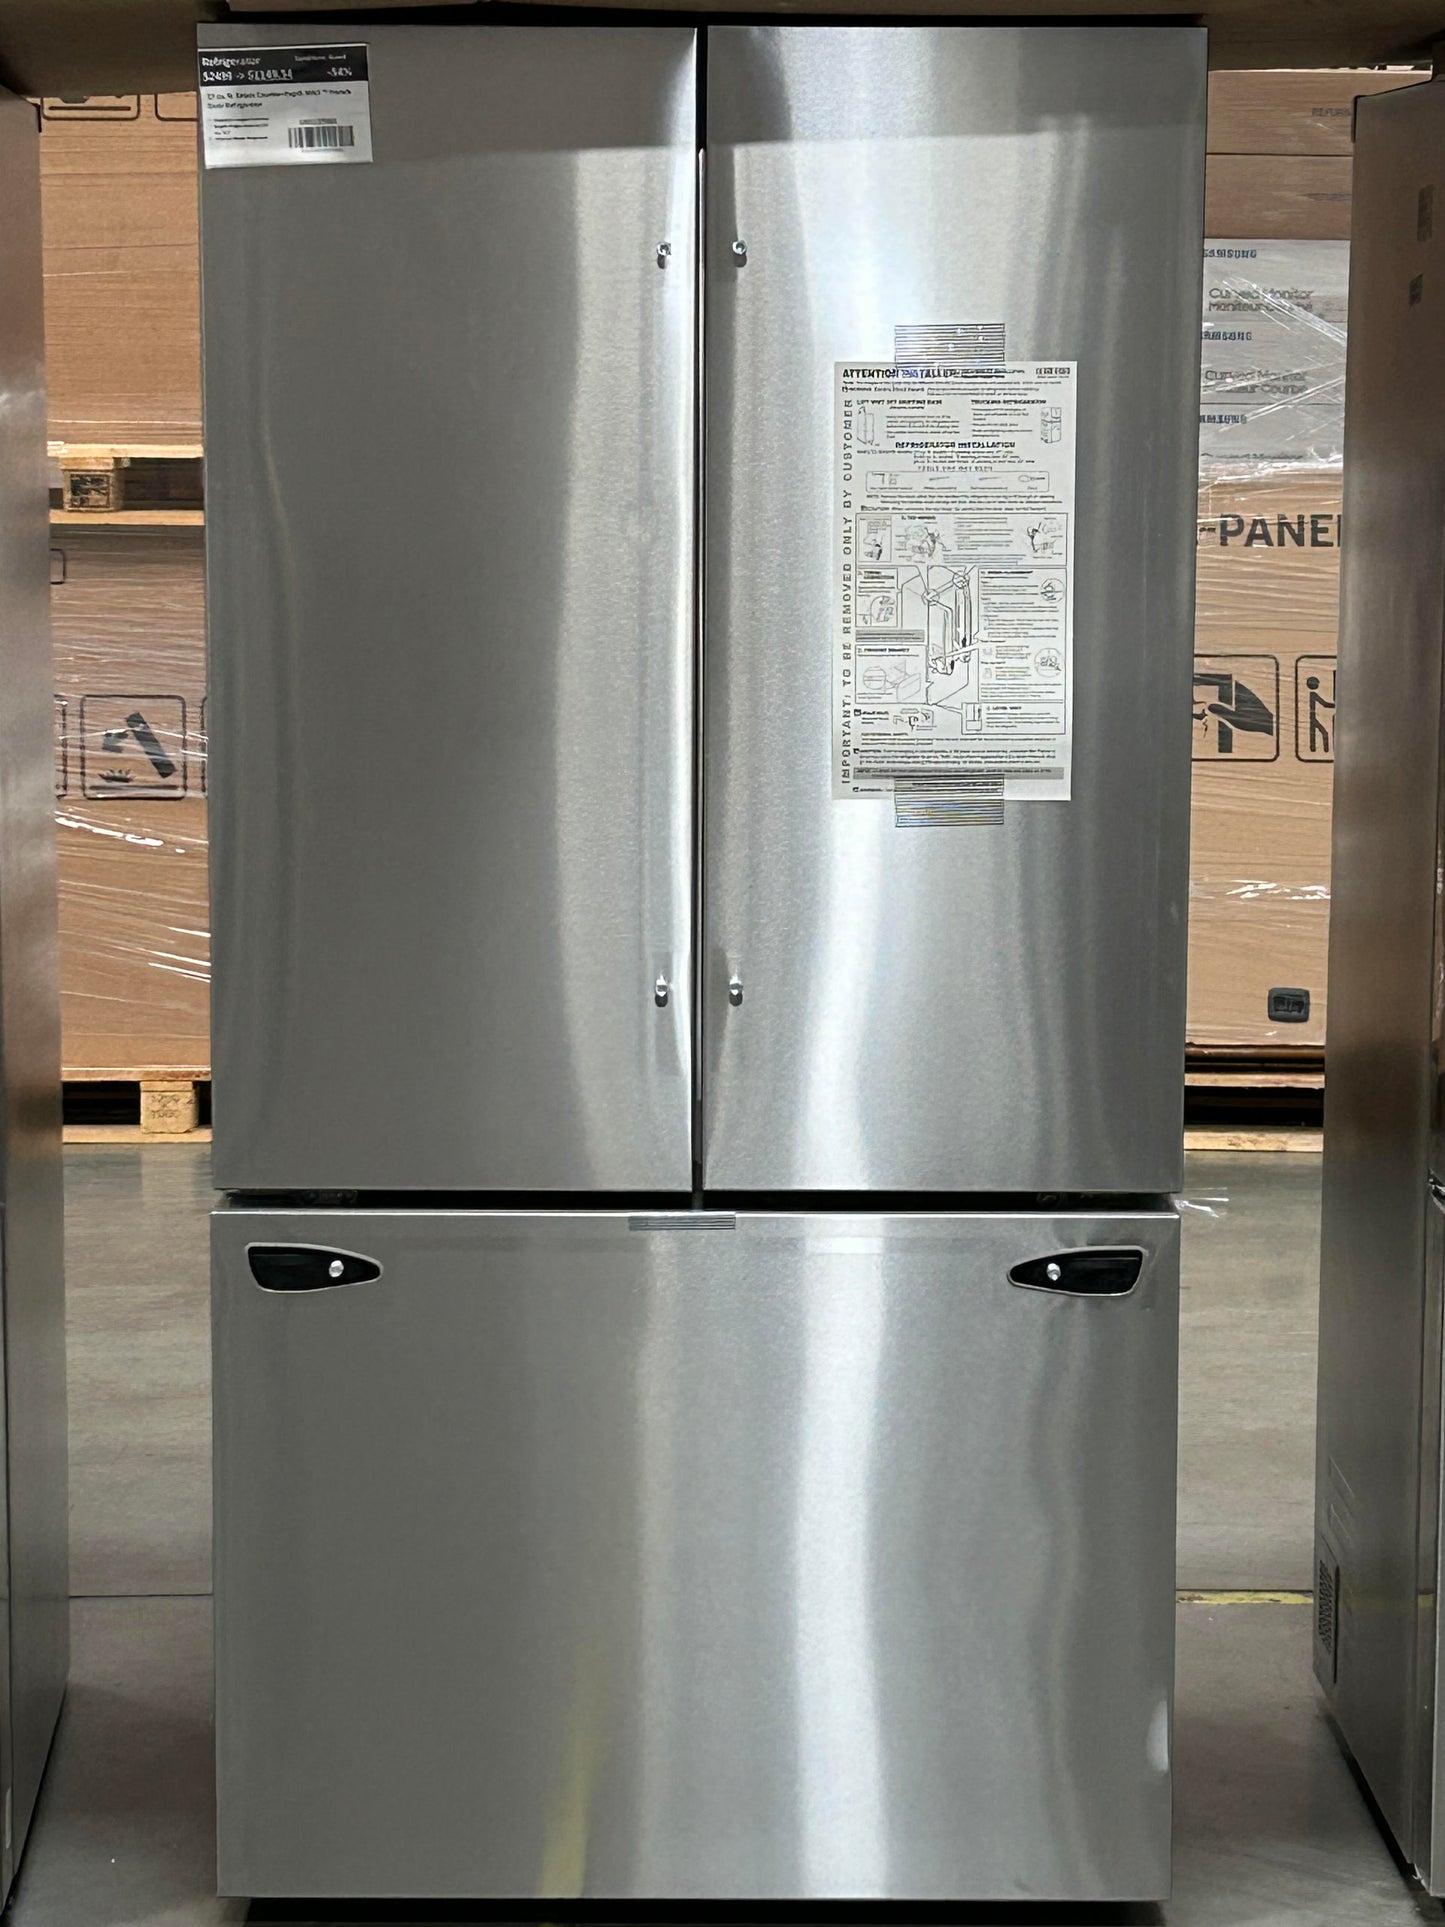 [LG]27 cu. ft. Smart Counter-Depth MAX ™ French Door Refrigerator